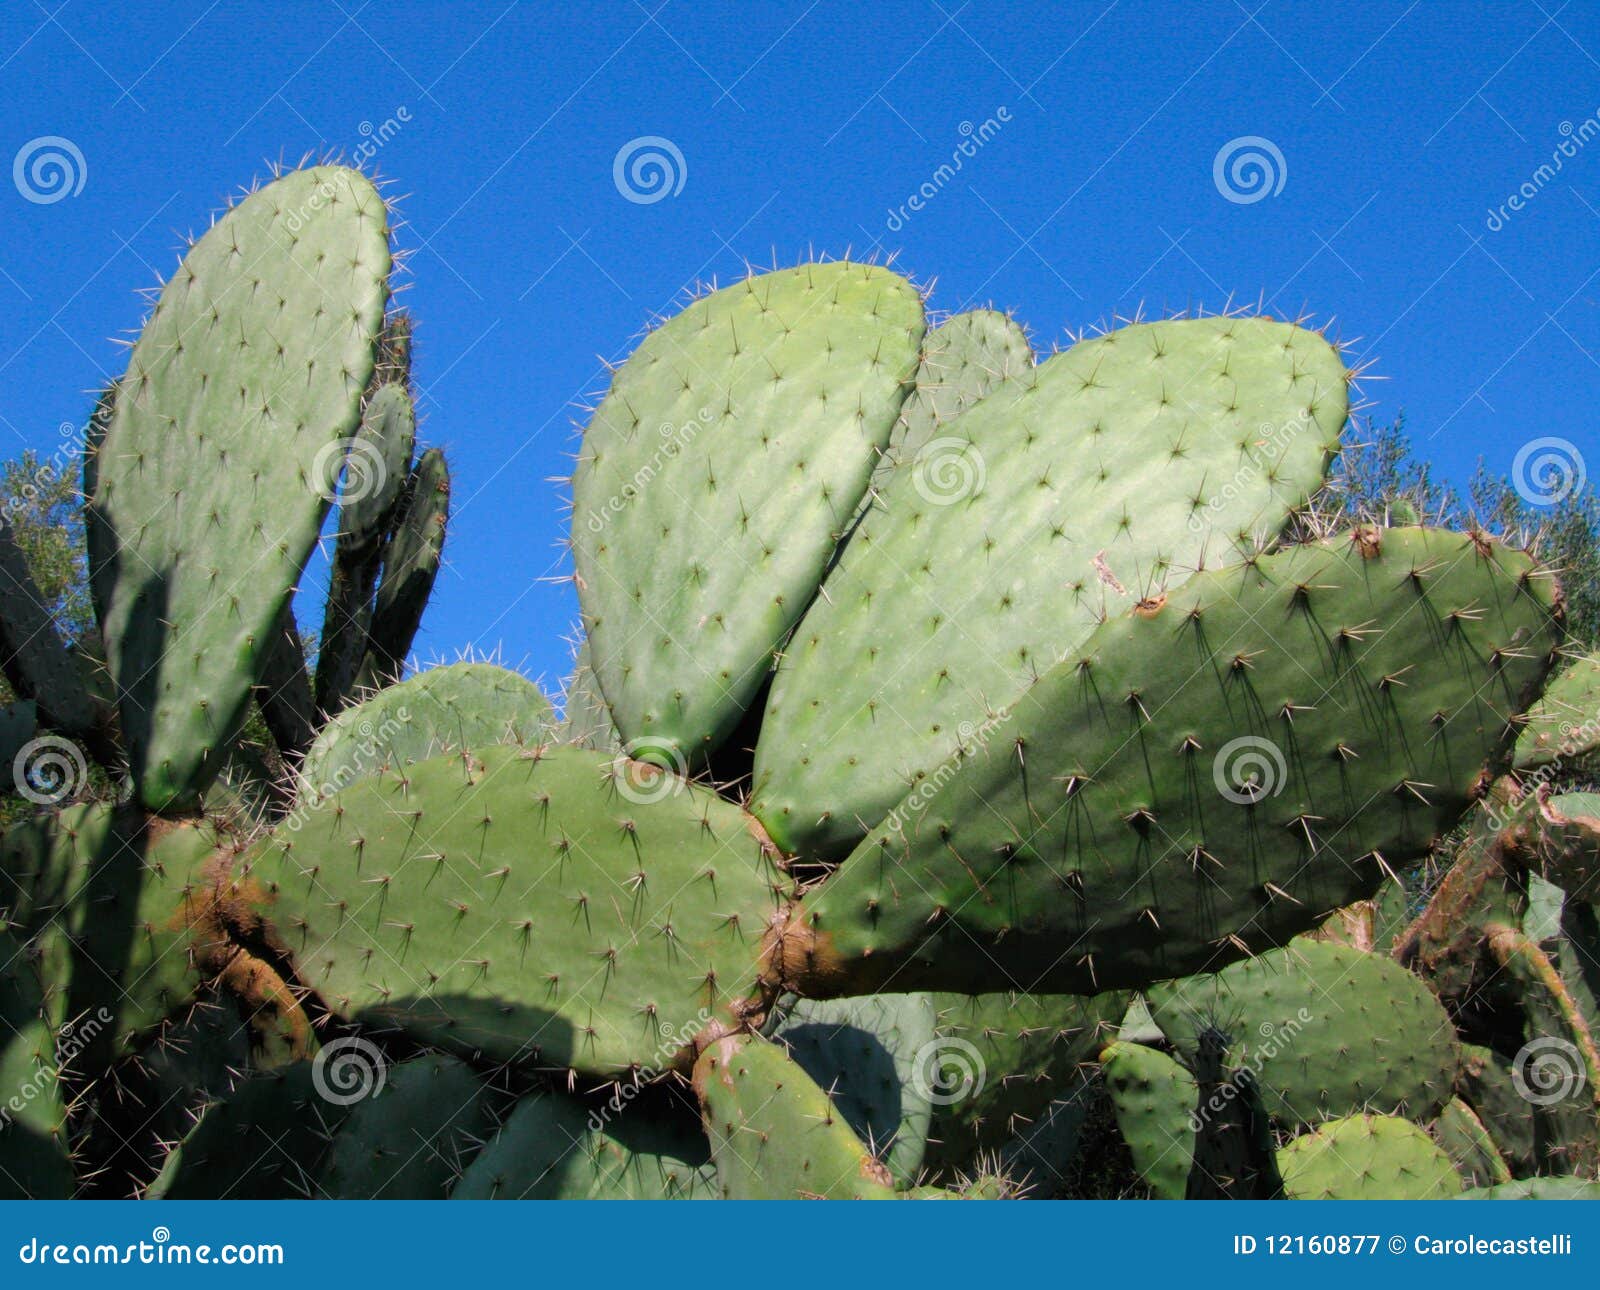 prickly pear cactus on blue sky - algeria